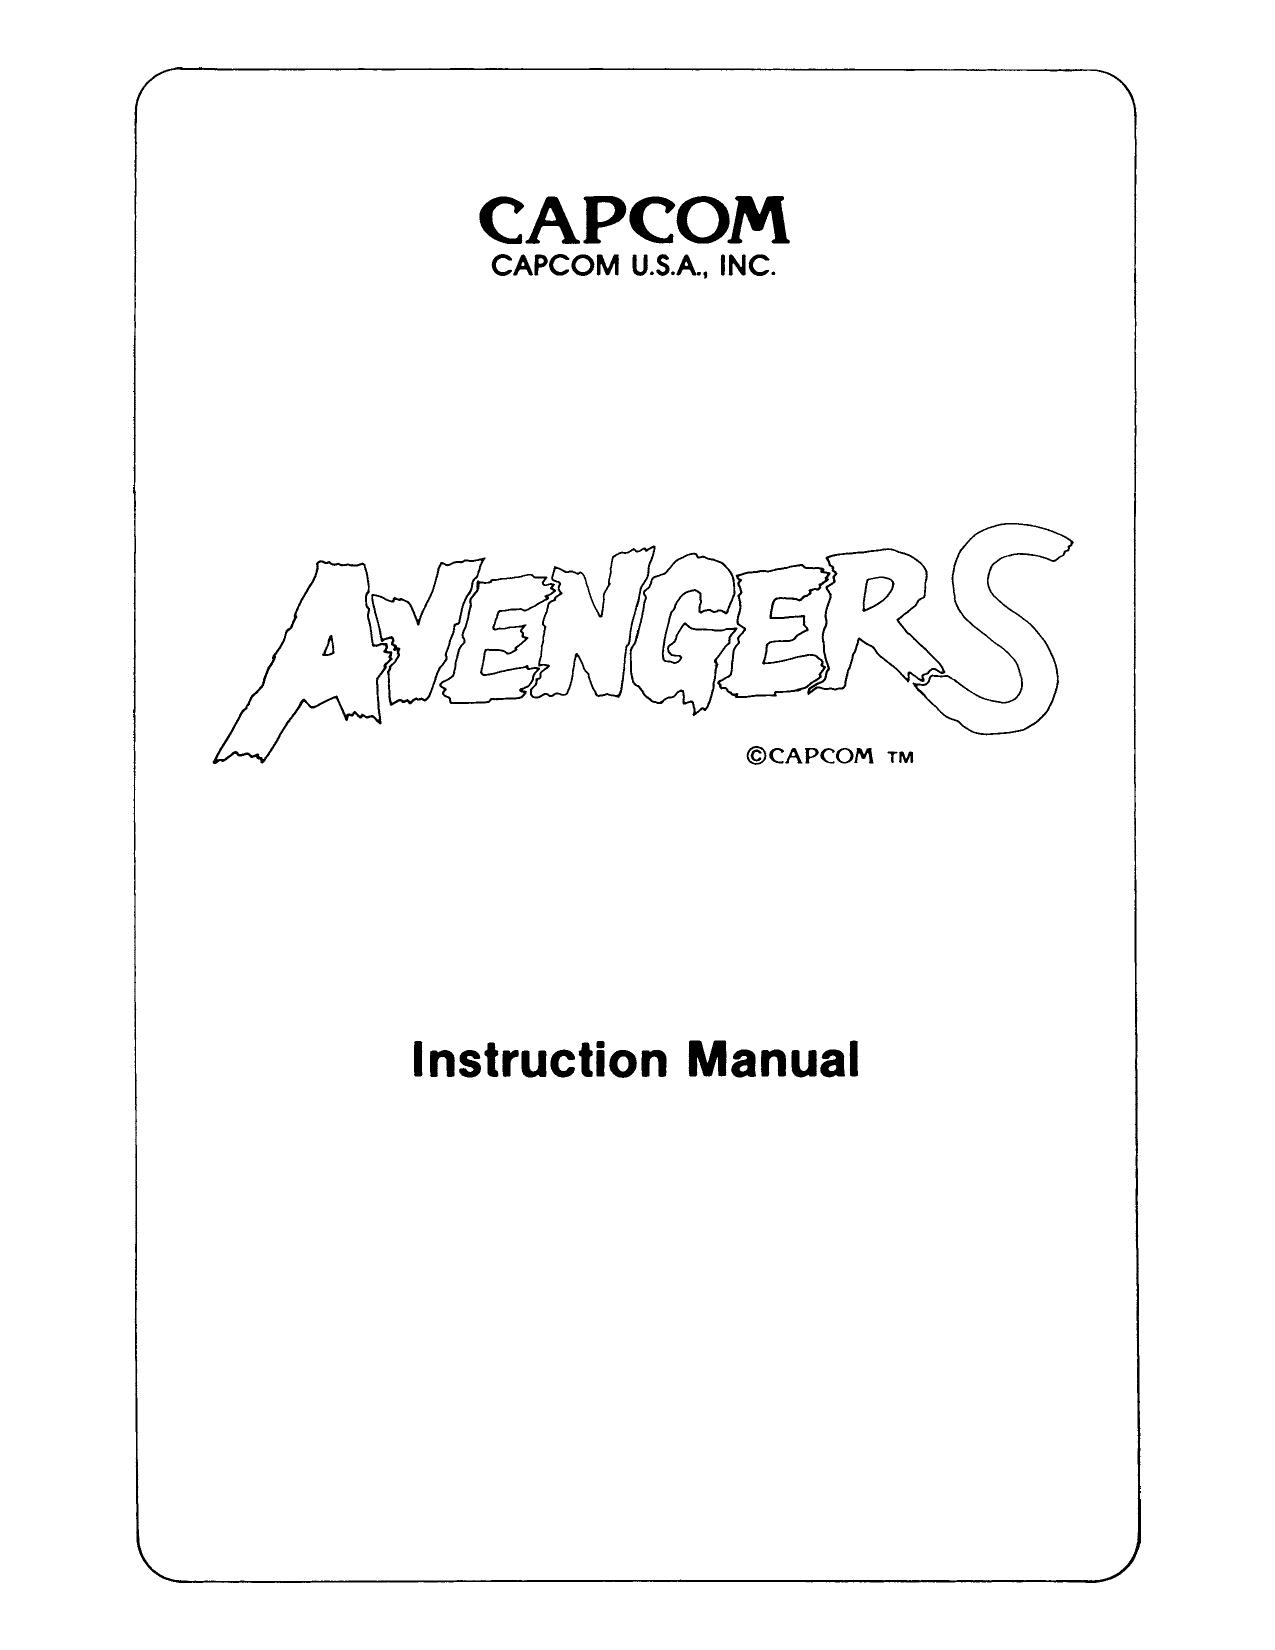 Capcom Avengers Manual